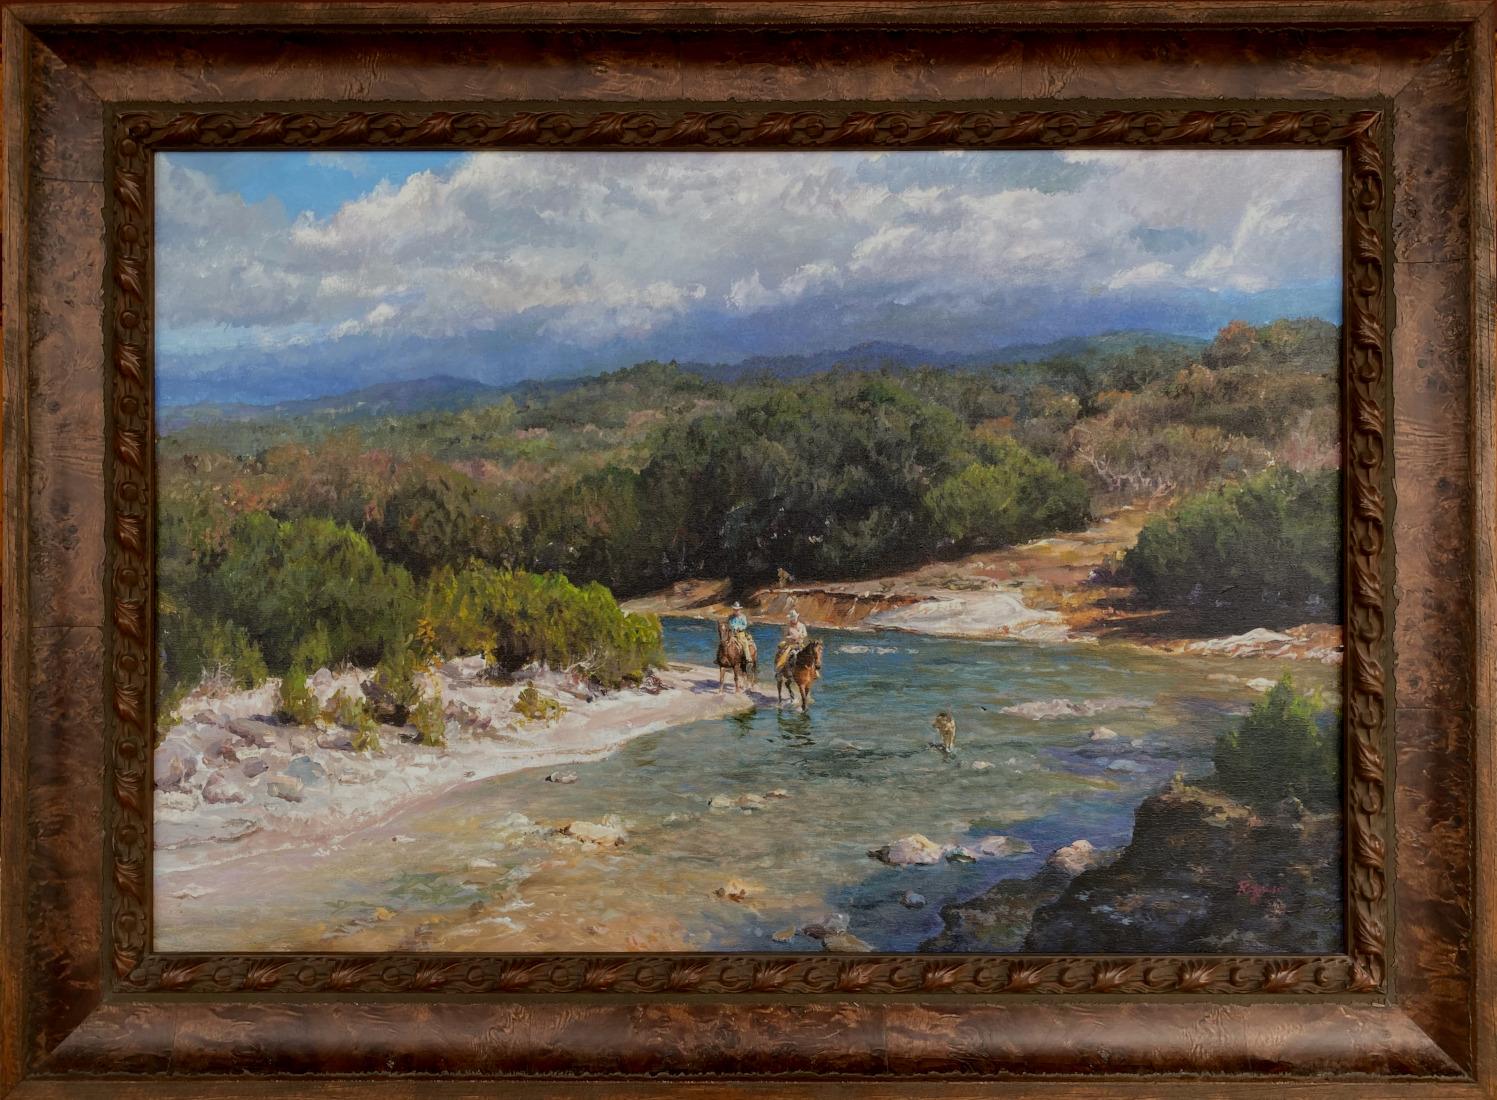 James Robinson Landscape Painting - "COW CREEK" JAMES ROBINSON, TEXAS LANDSCAPE